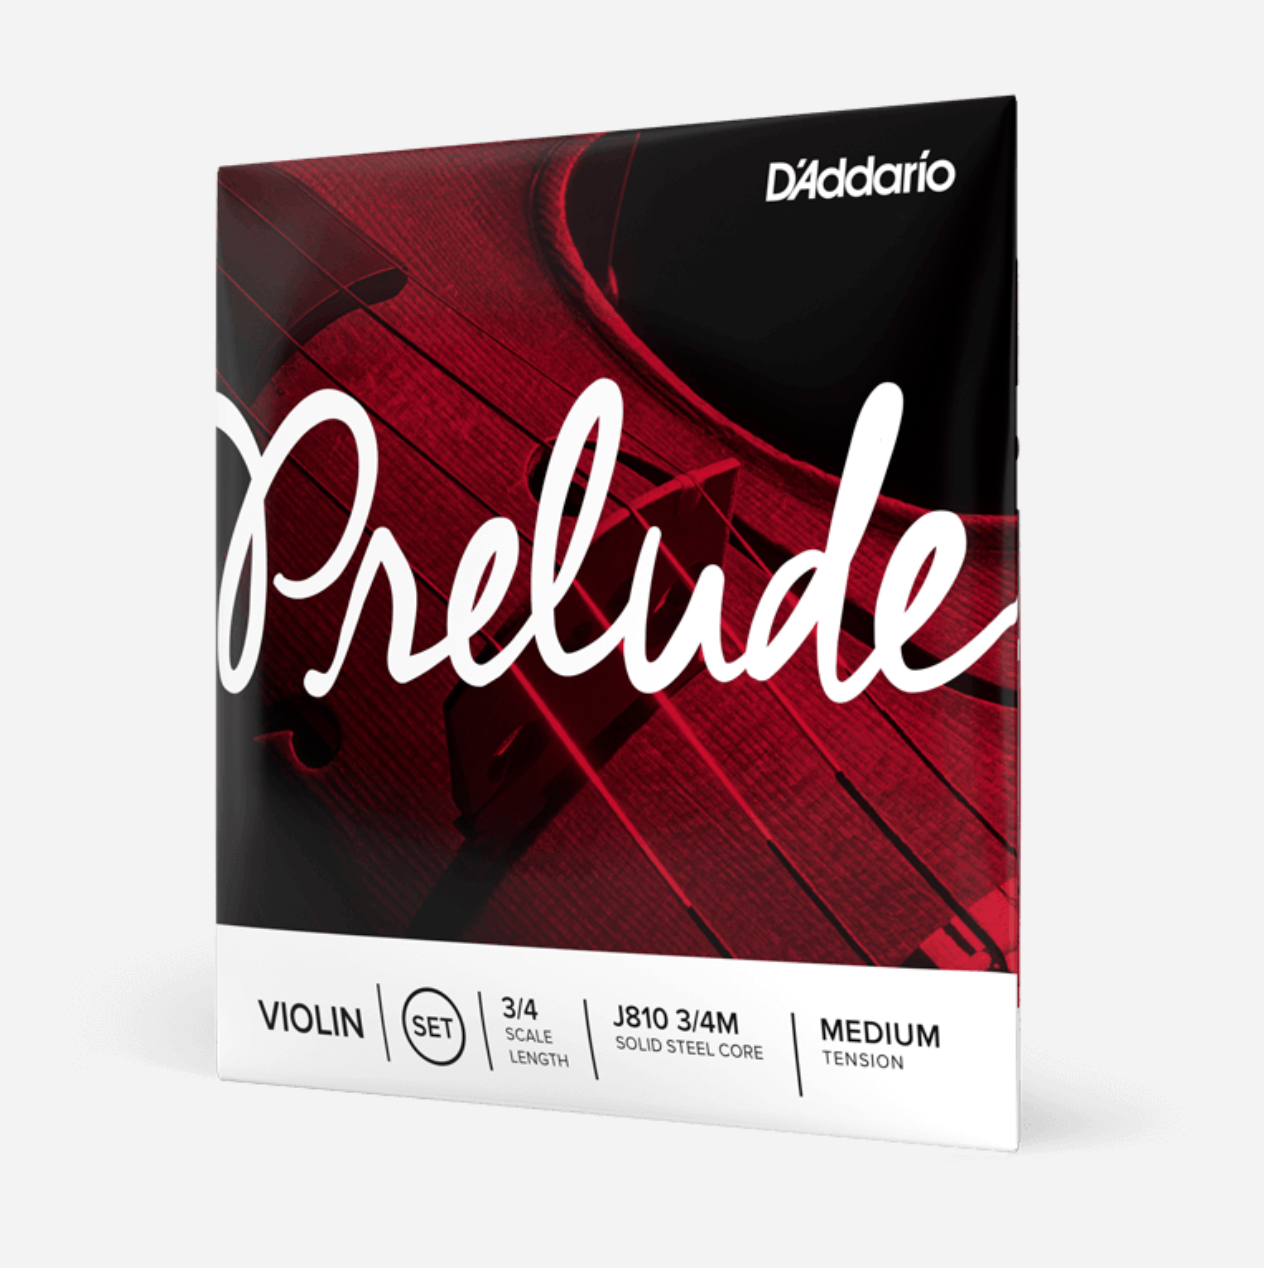 D'Addario Violin Strings - Prelude